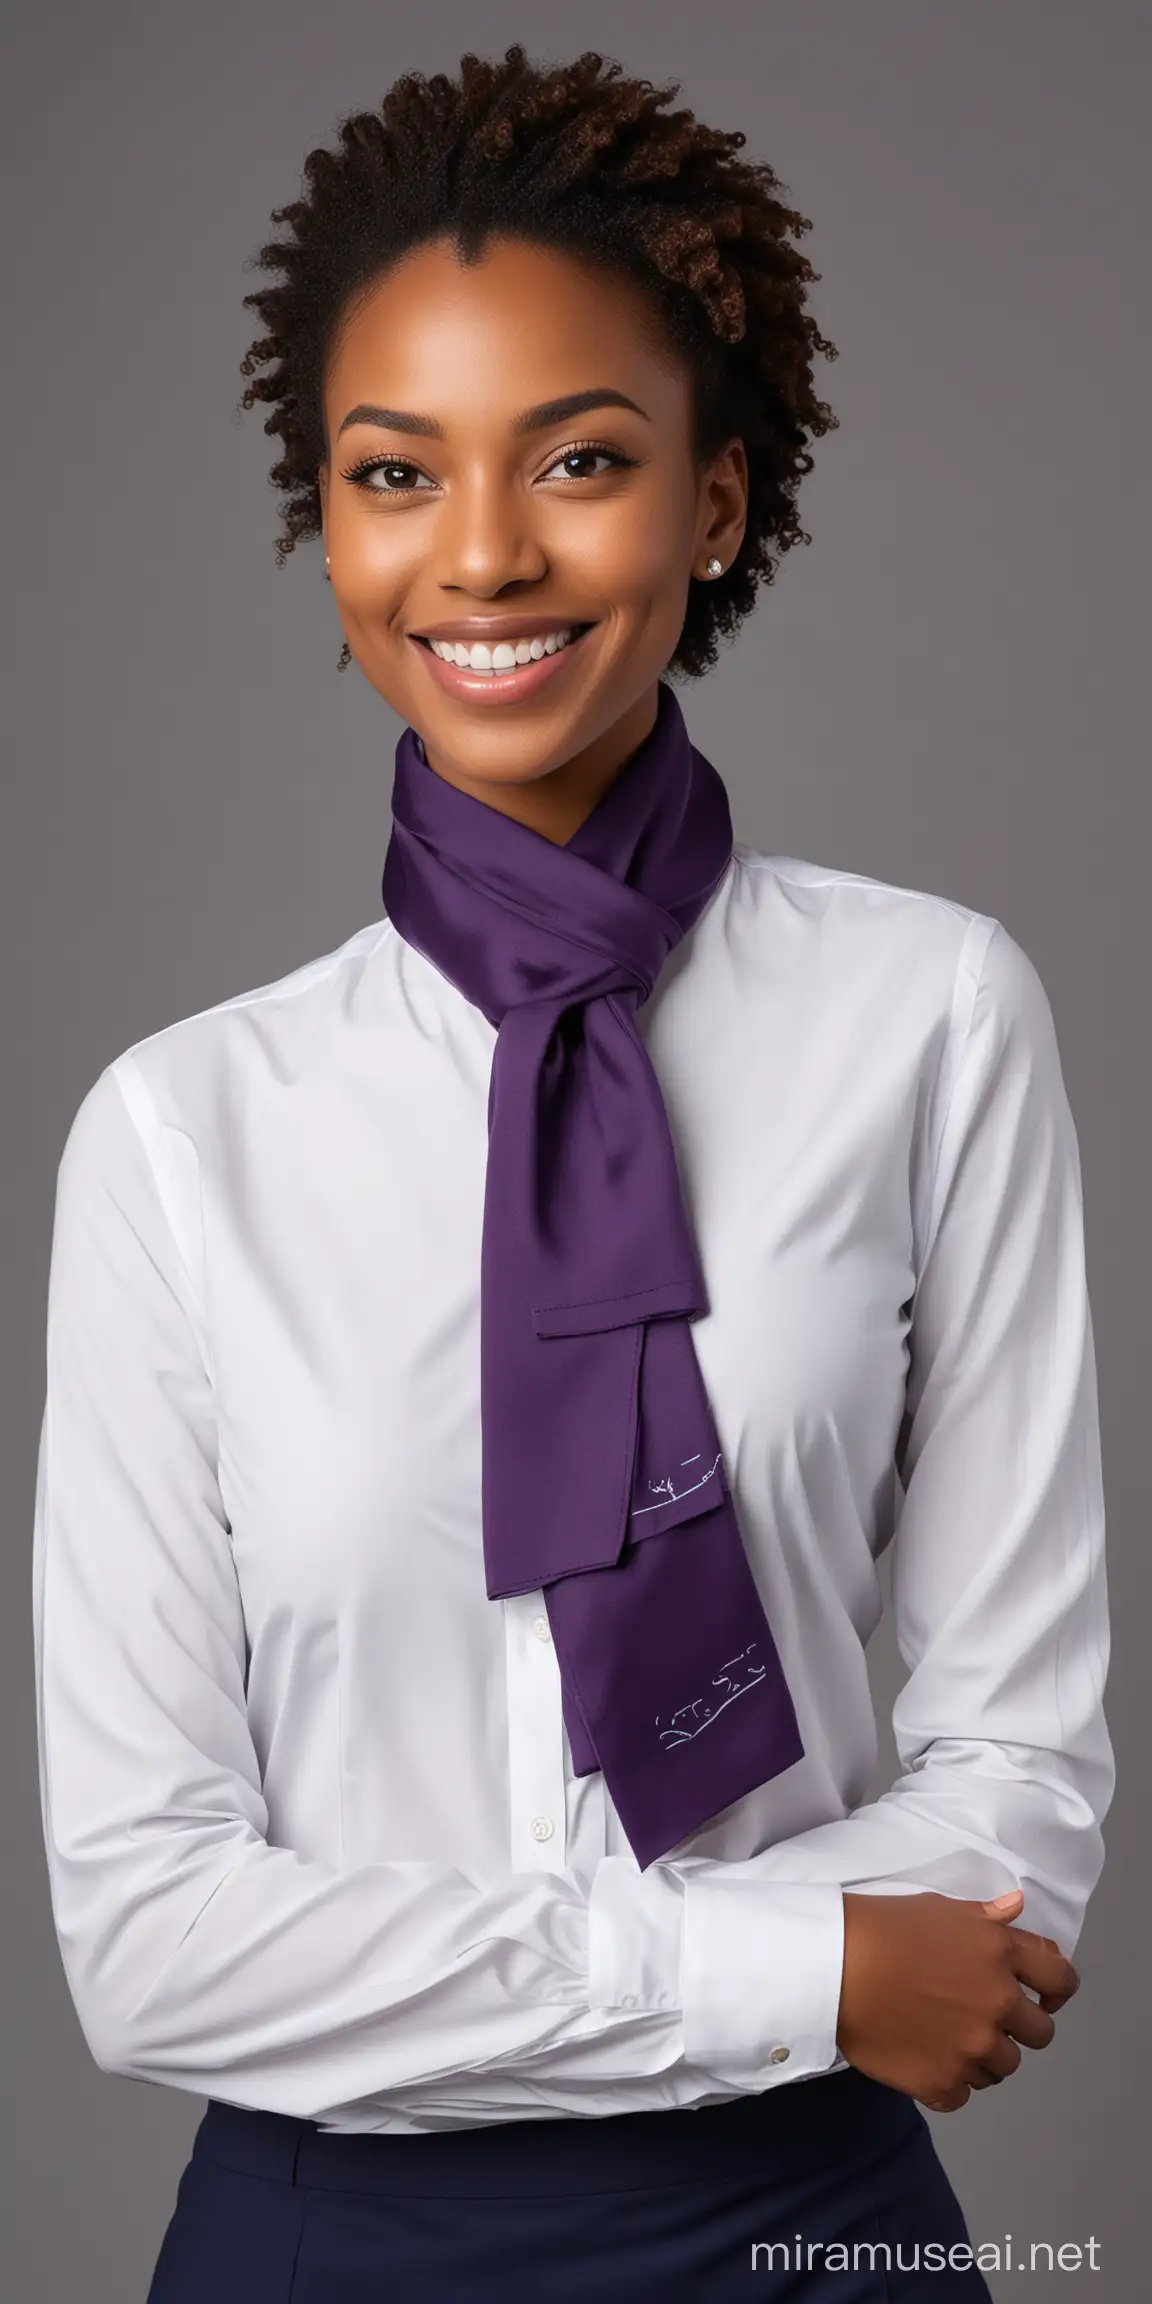 Smiling Black Woman Event Staffer in Modern Uniform White Shirt with Dark Purple Muffler